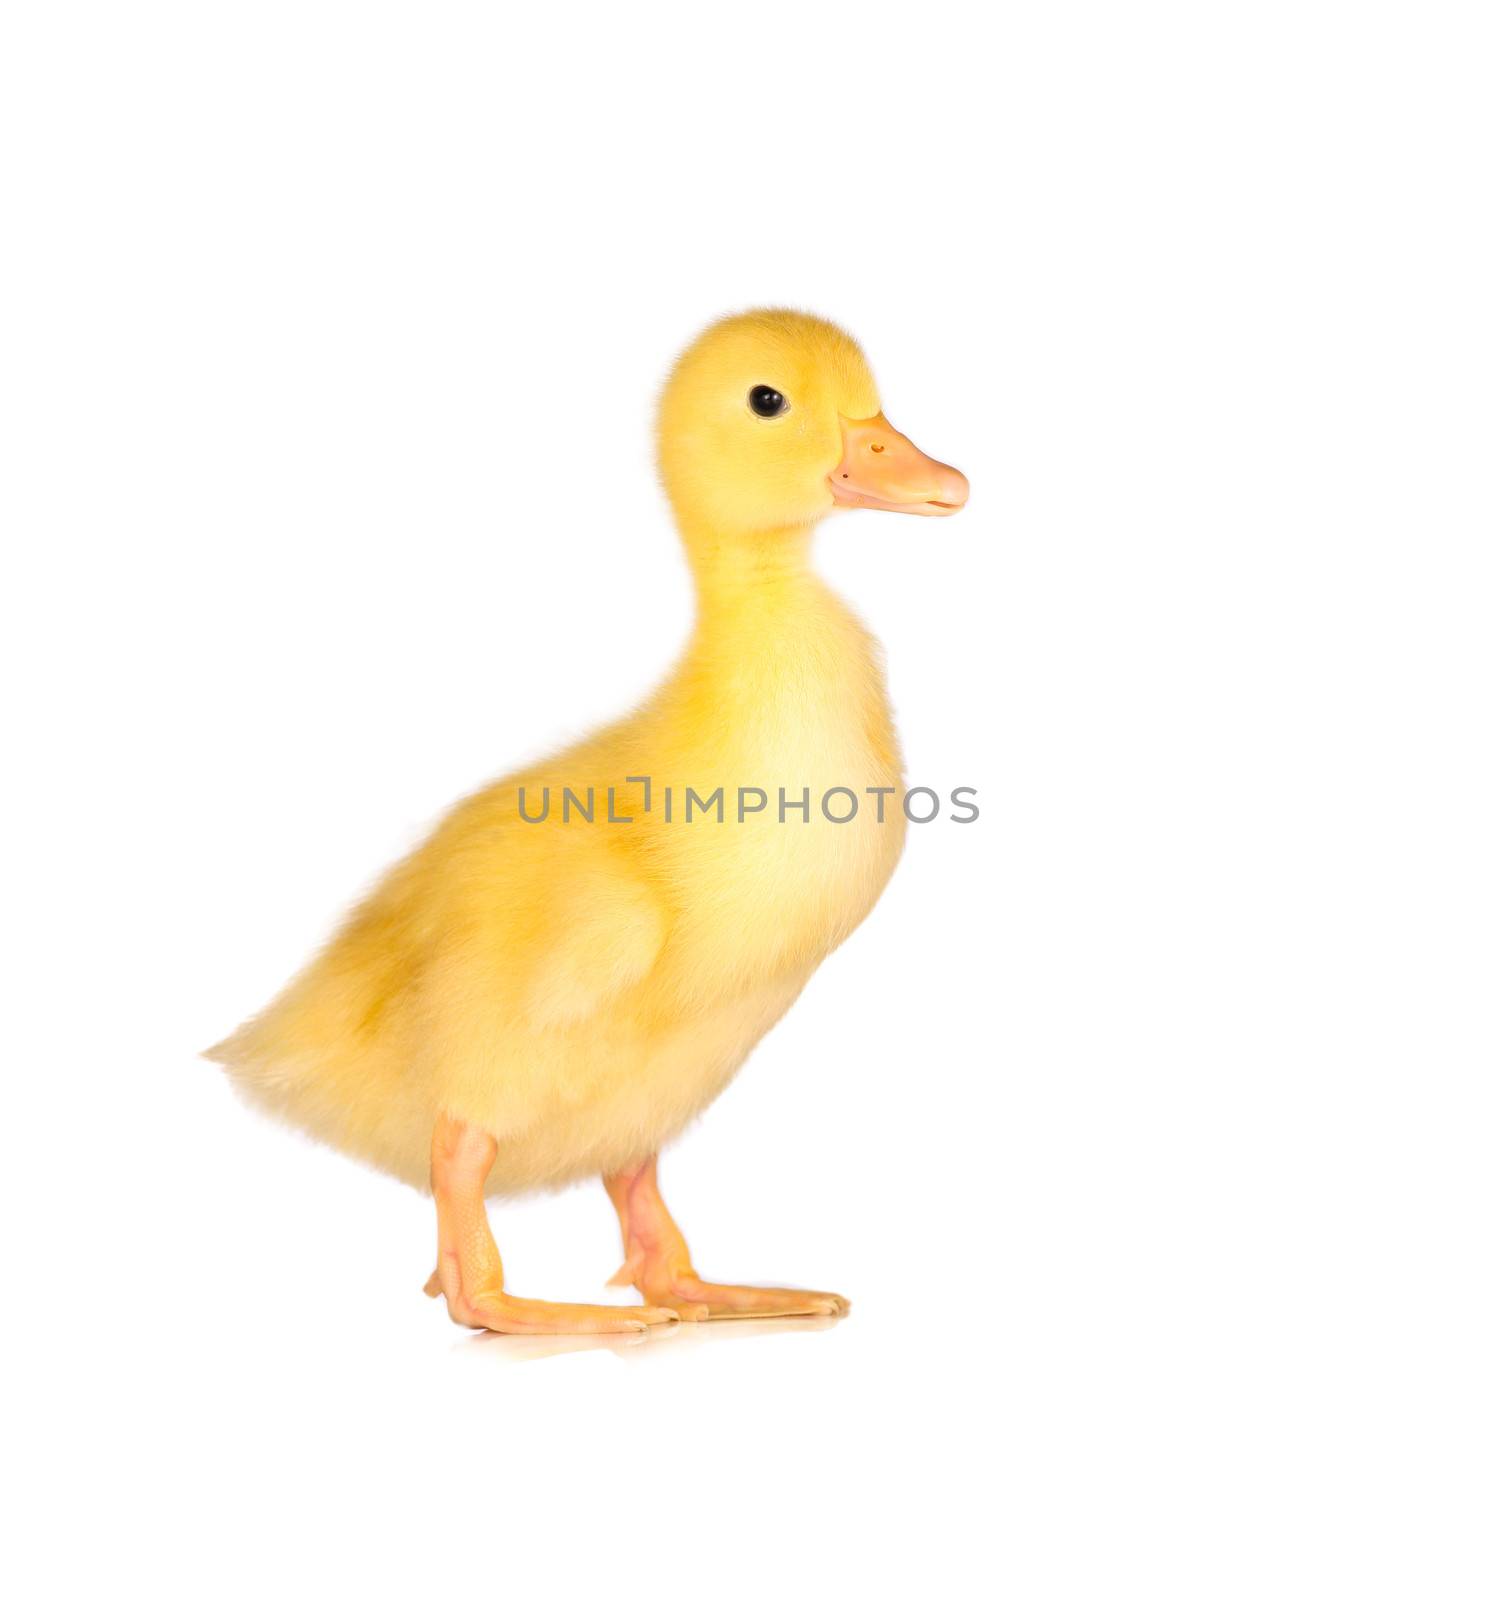 Cute yellow duckling in studio shot